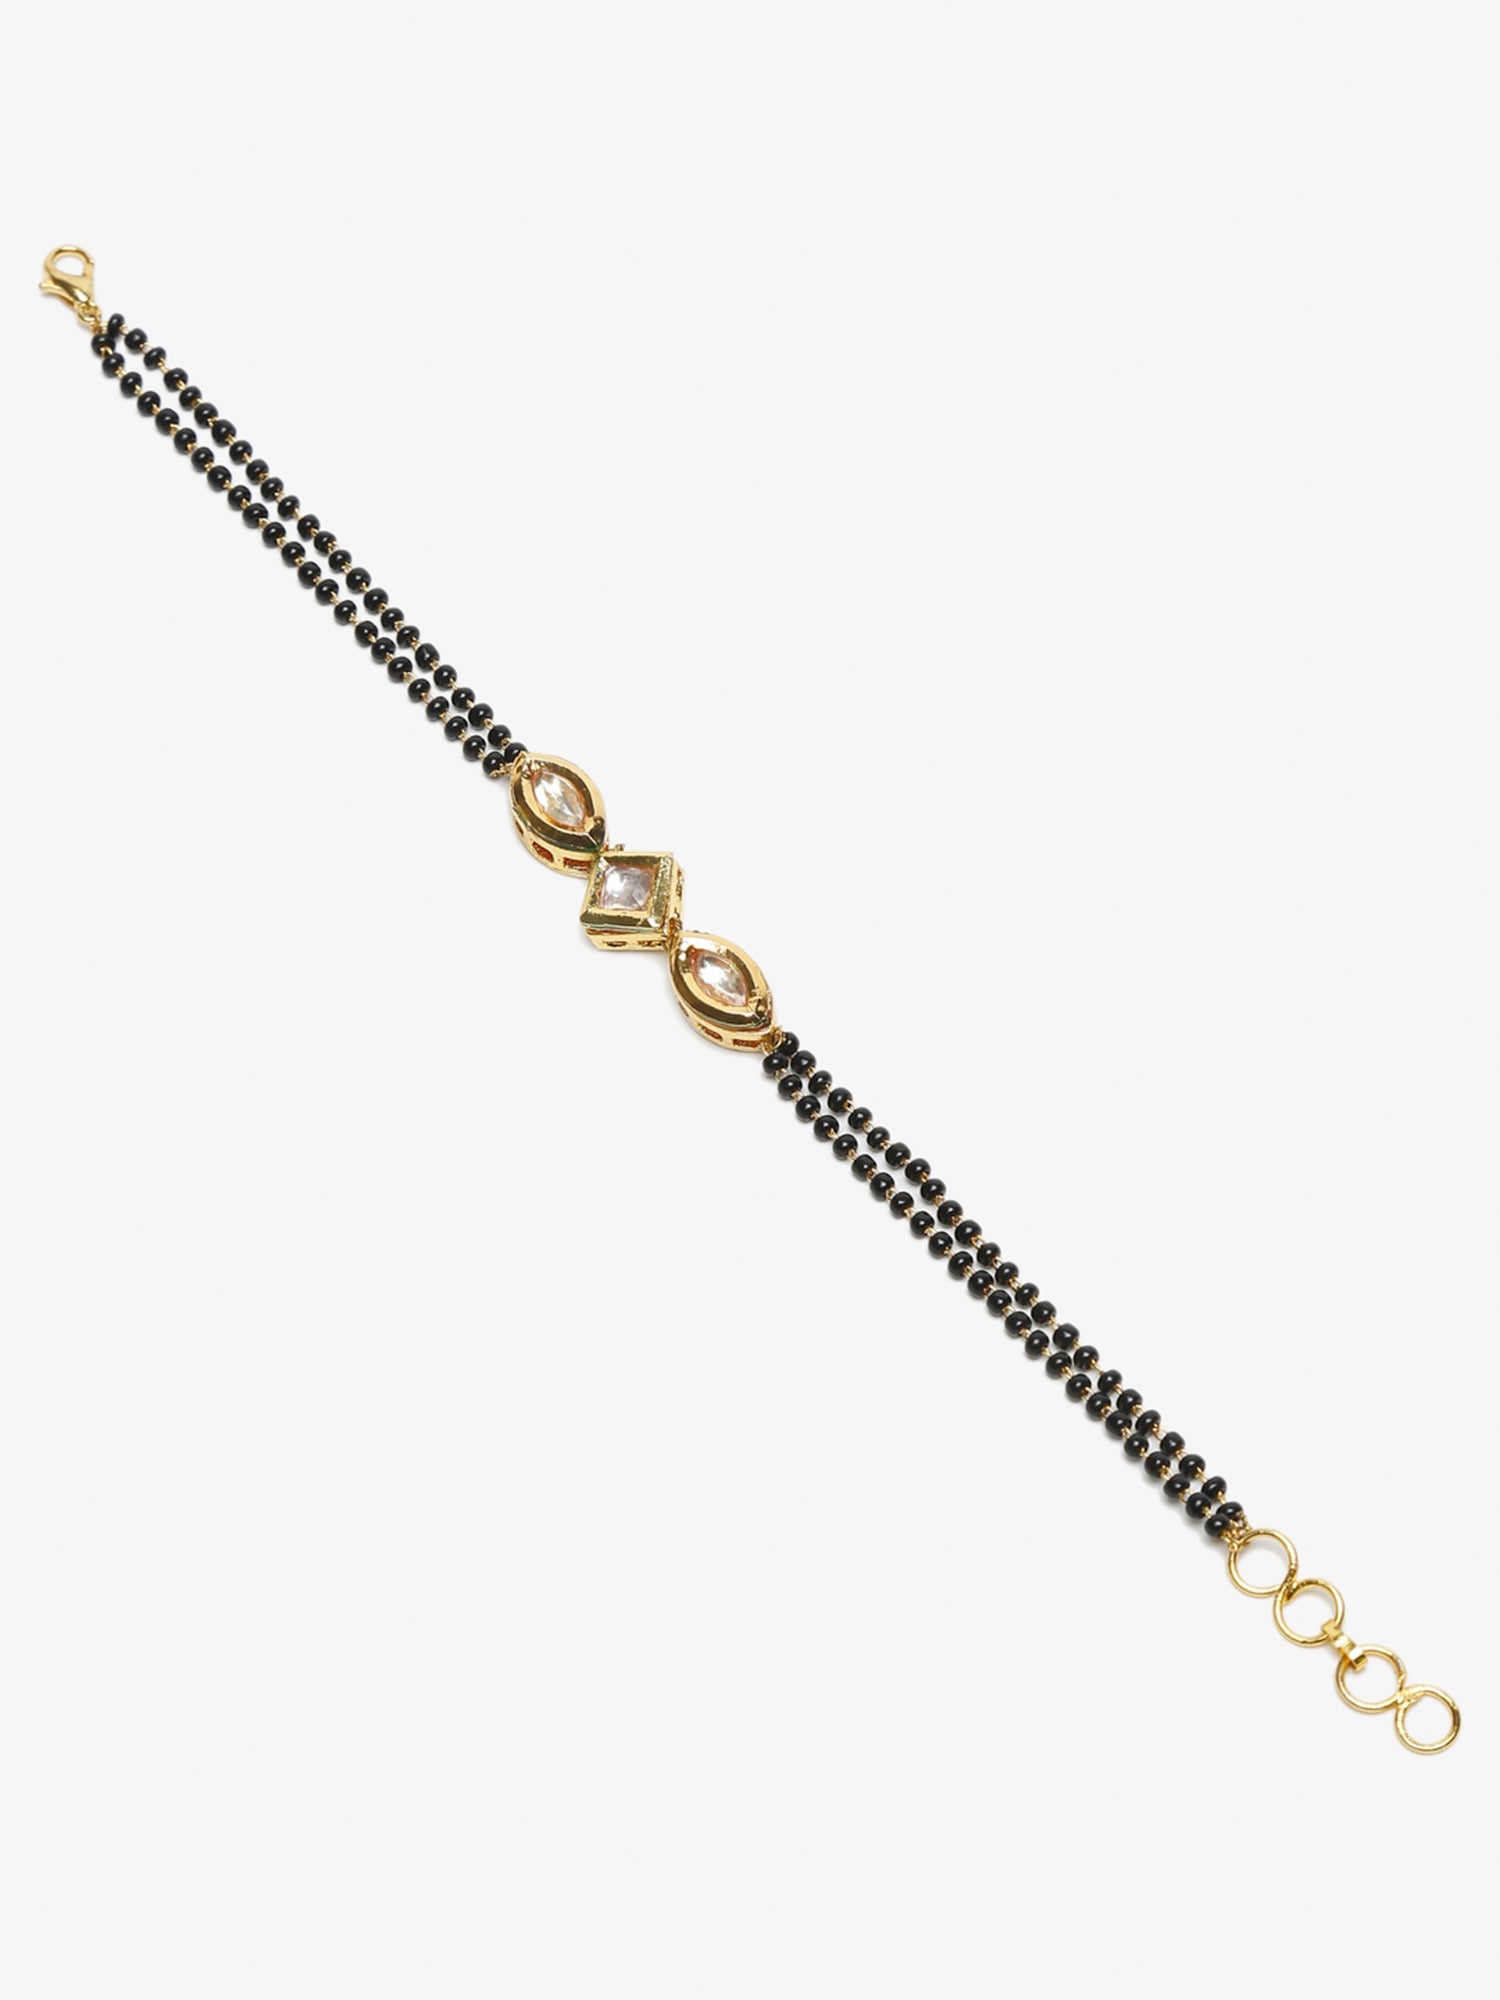 Mangalsutra Bracelet Designs | Bridal Accessories | Mangalsutra Designs | Mangalsutra  bracelet, Gold bracelet simple, Black beaded bracelets